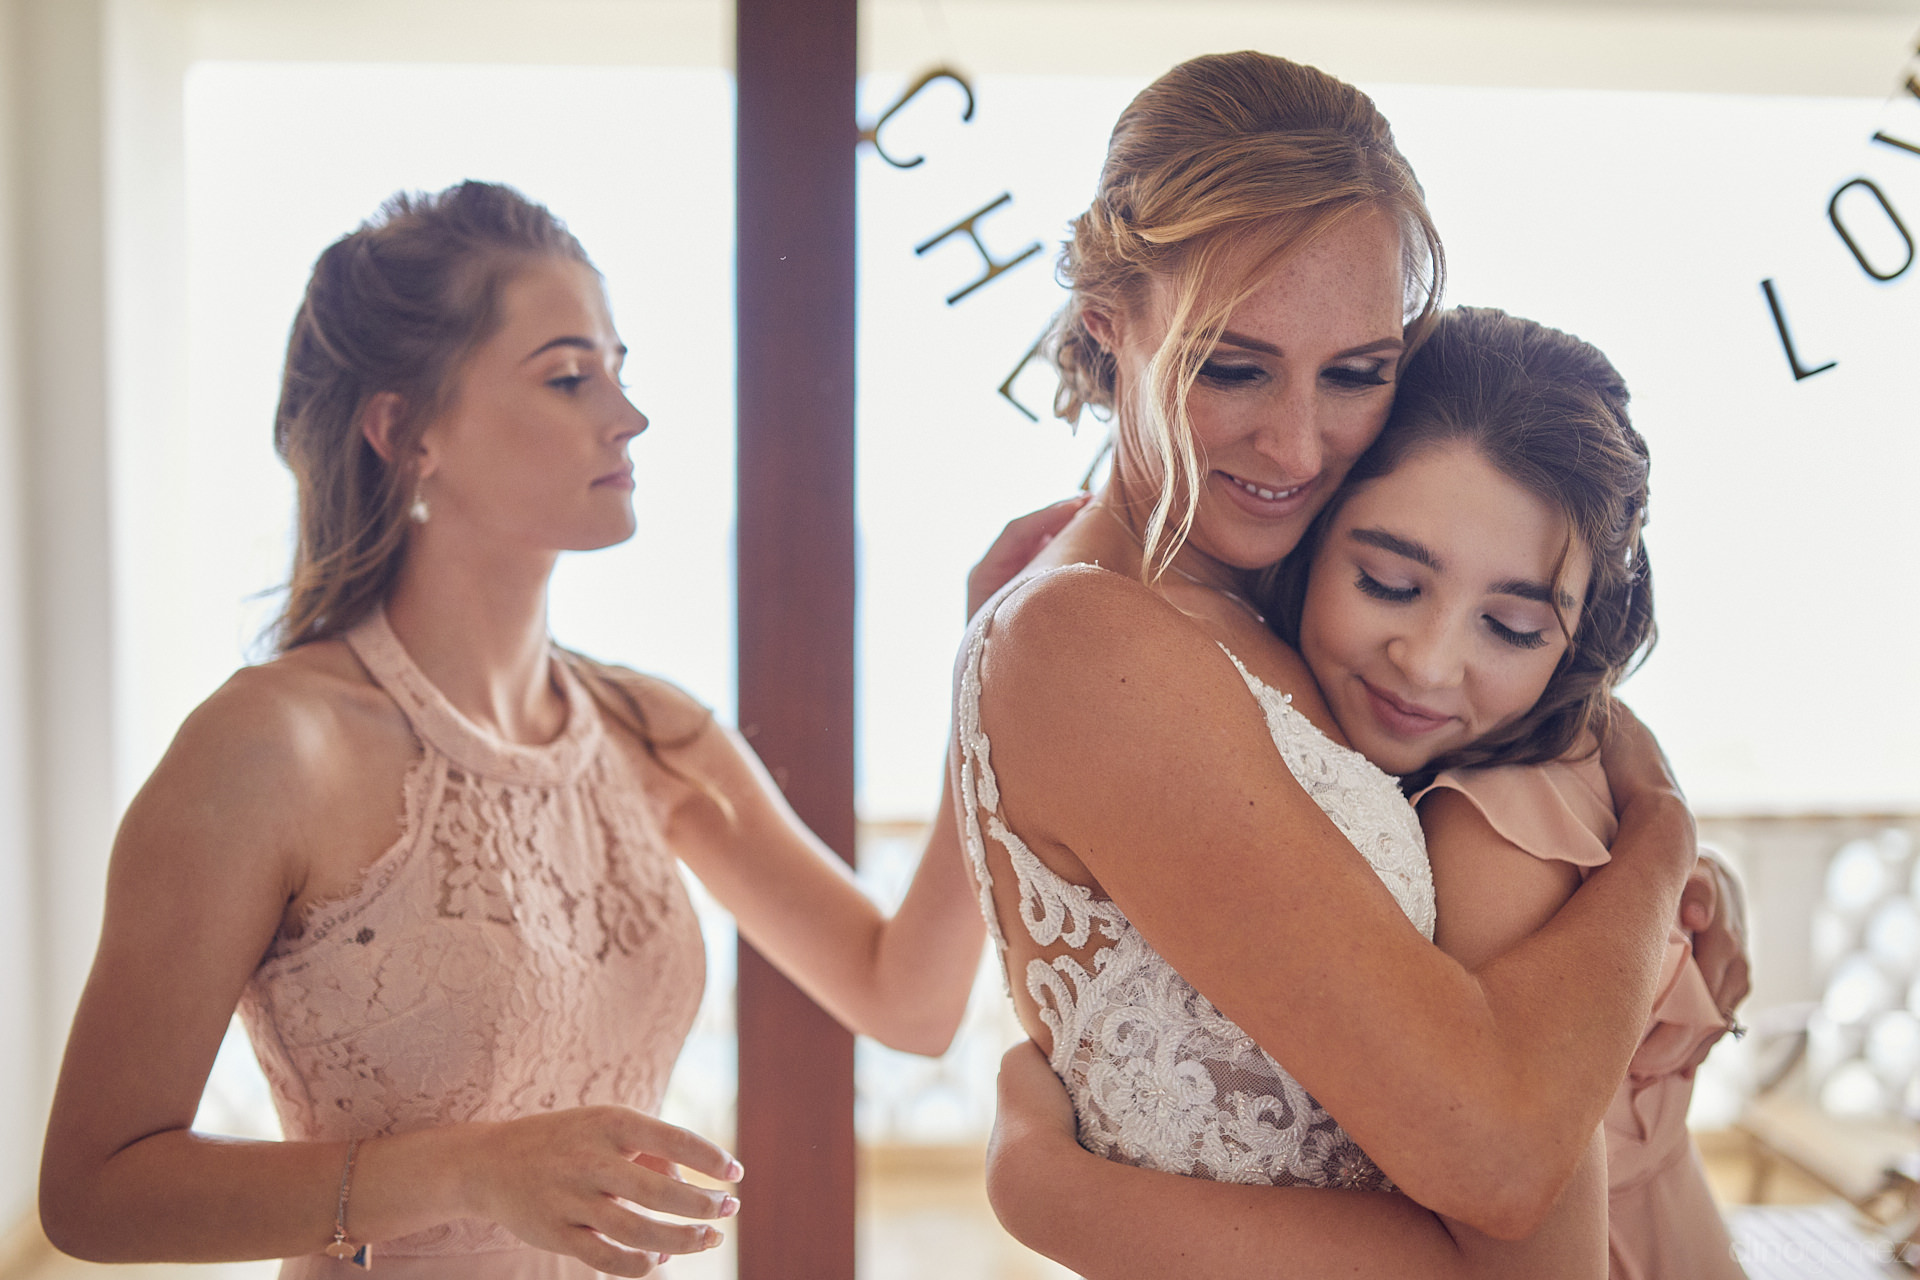 Cabo San Lucas Wedding Photographer Captures A Unique And Emotional Moment - Mm